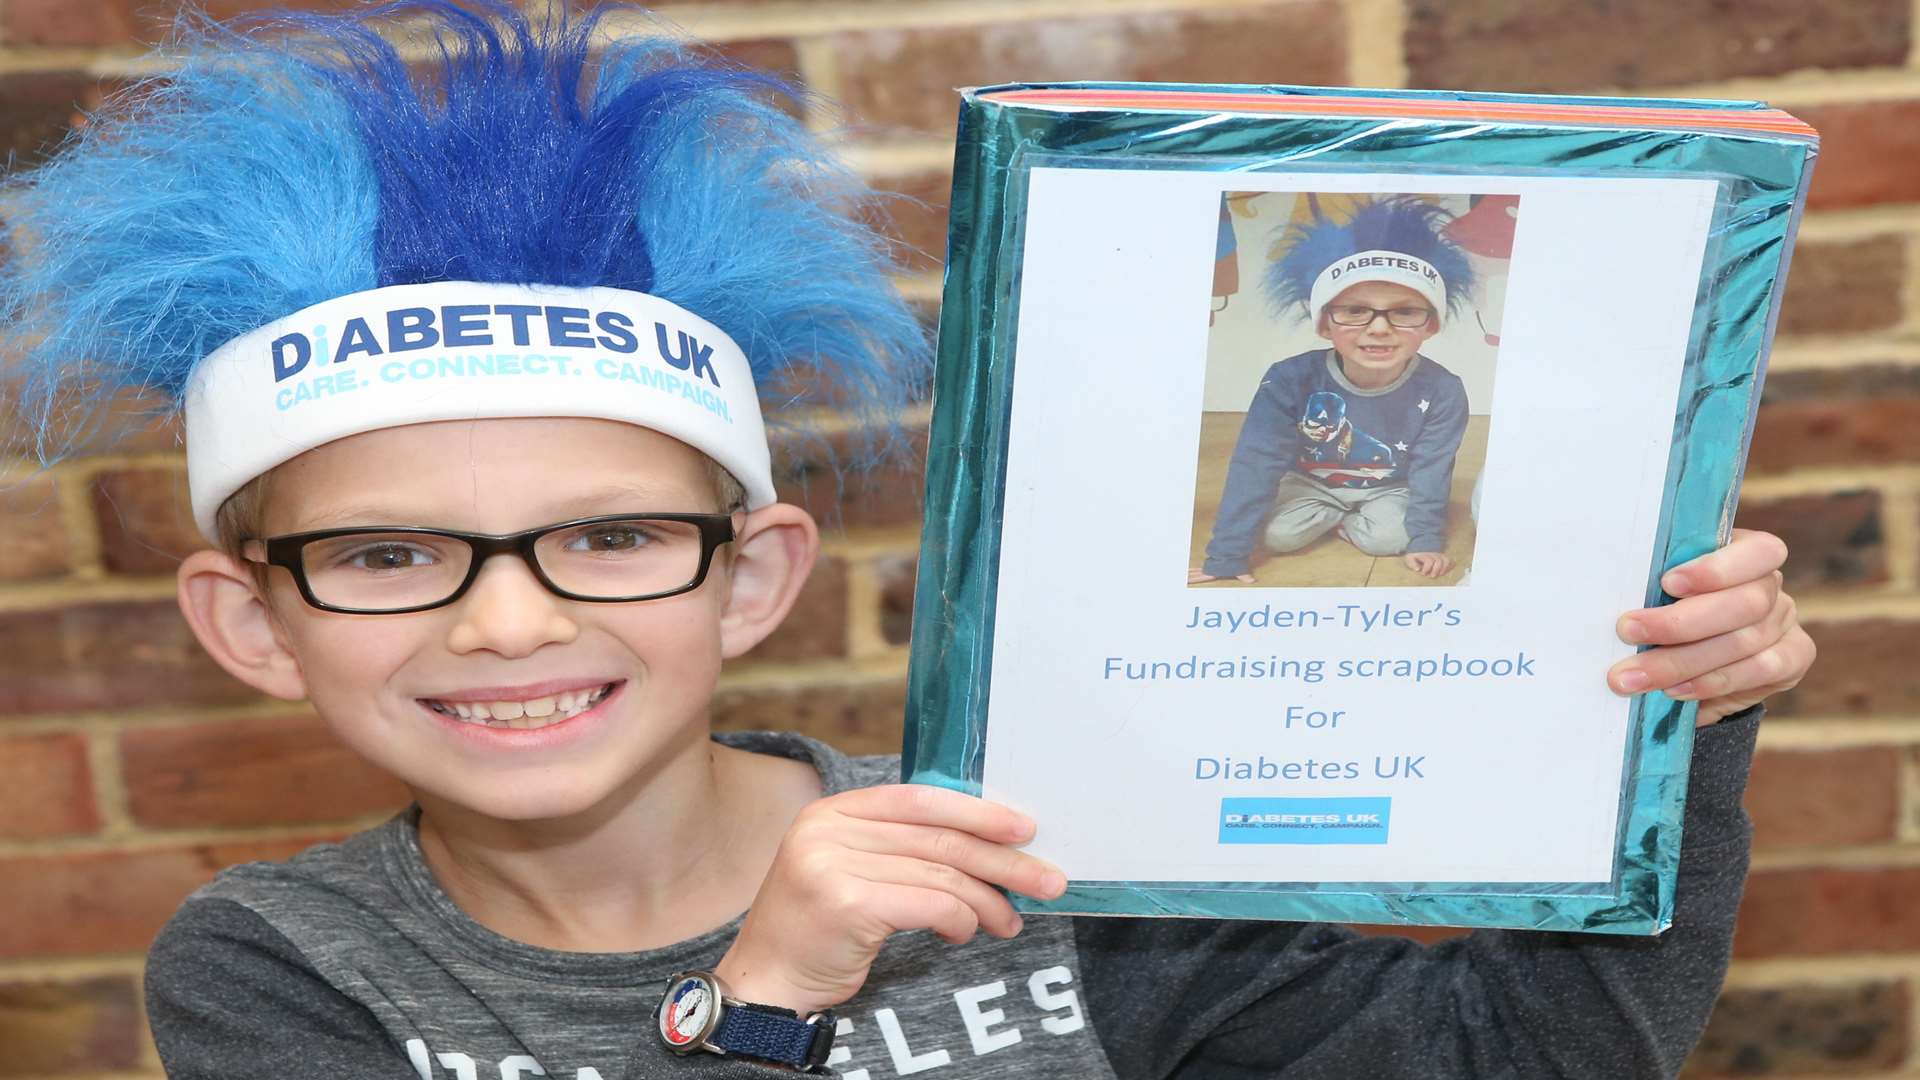 Jayden-Tyler Beckwith, raised thousands for Diabetes UK